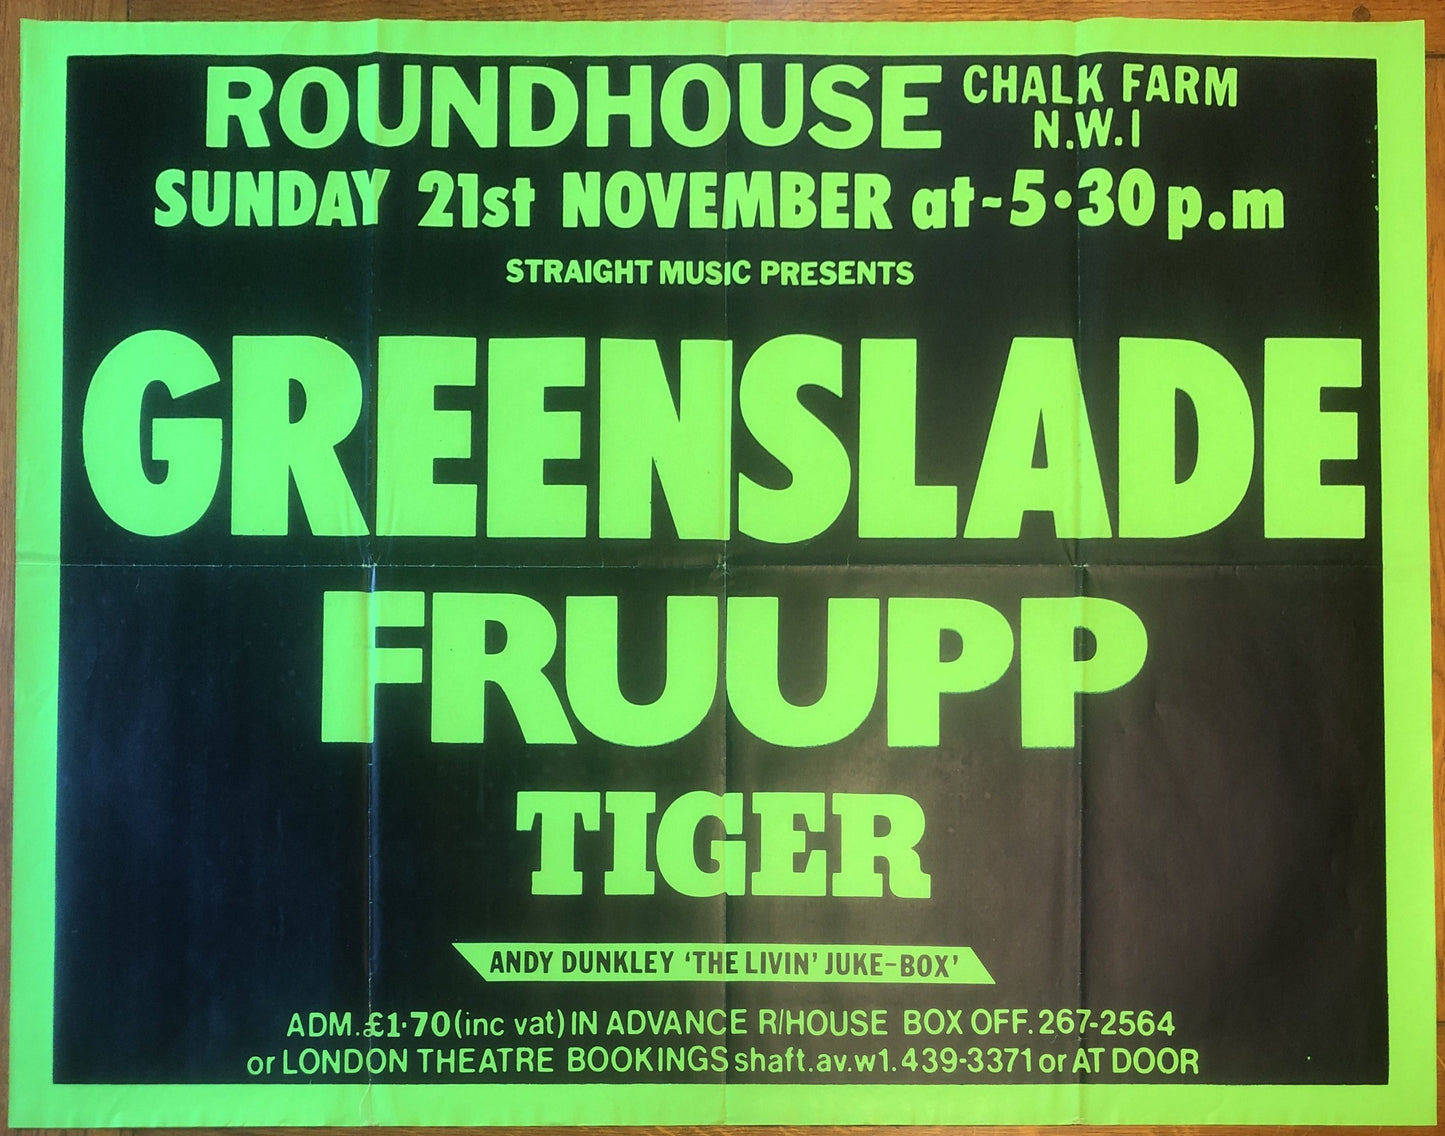 Greenslade Fruupp Original Promo Concert Tour Gig Poster Roundhouse London 21st Nov 1976